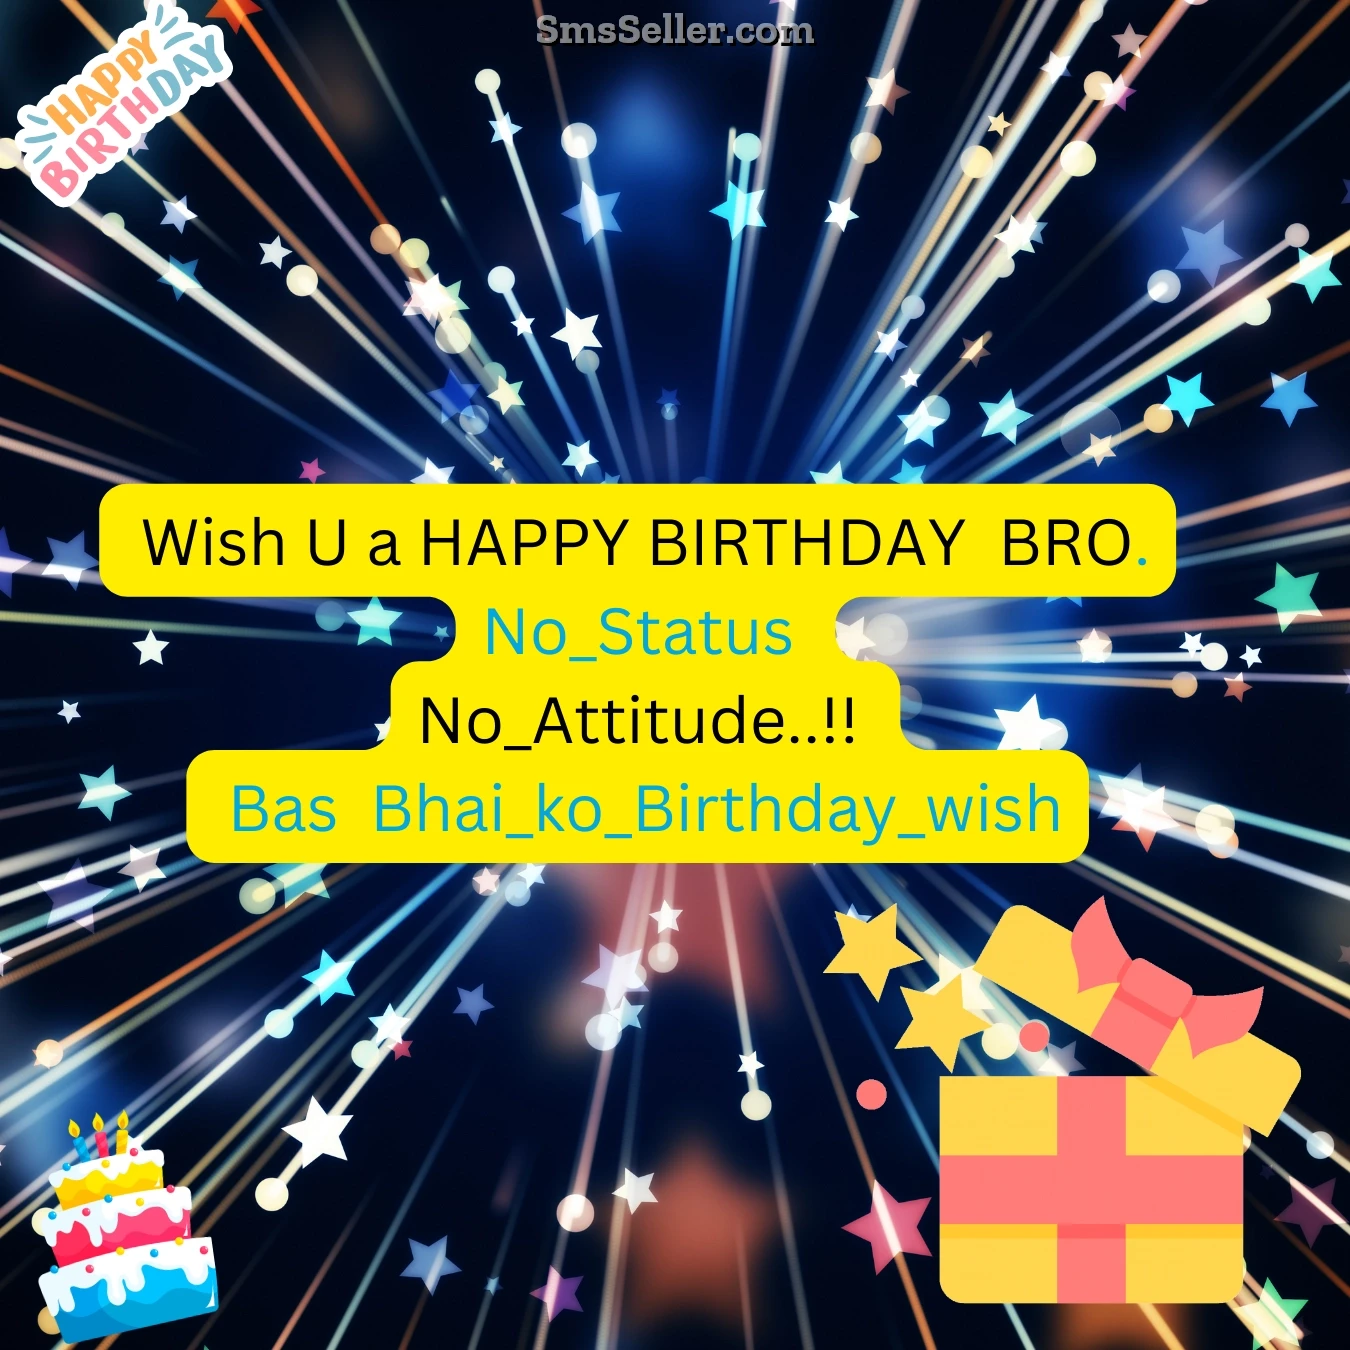 happy birthday wish brother khush raho hamesha